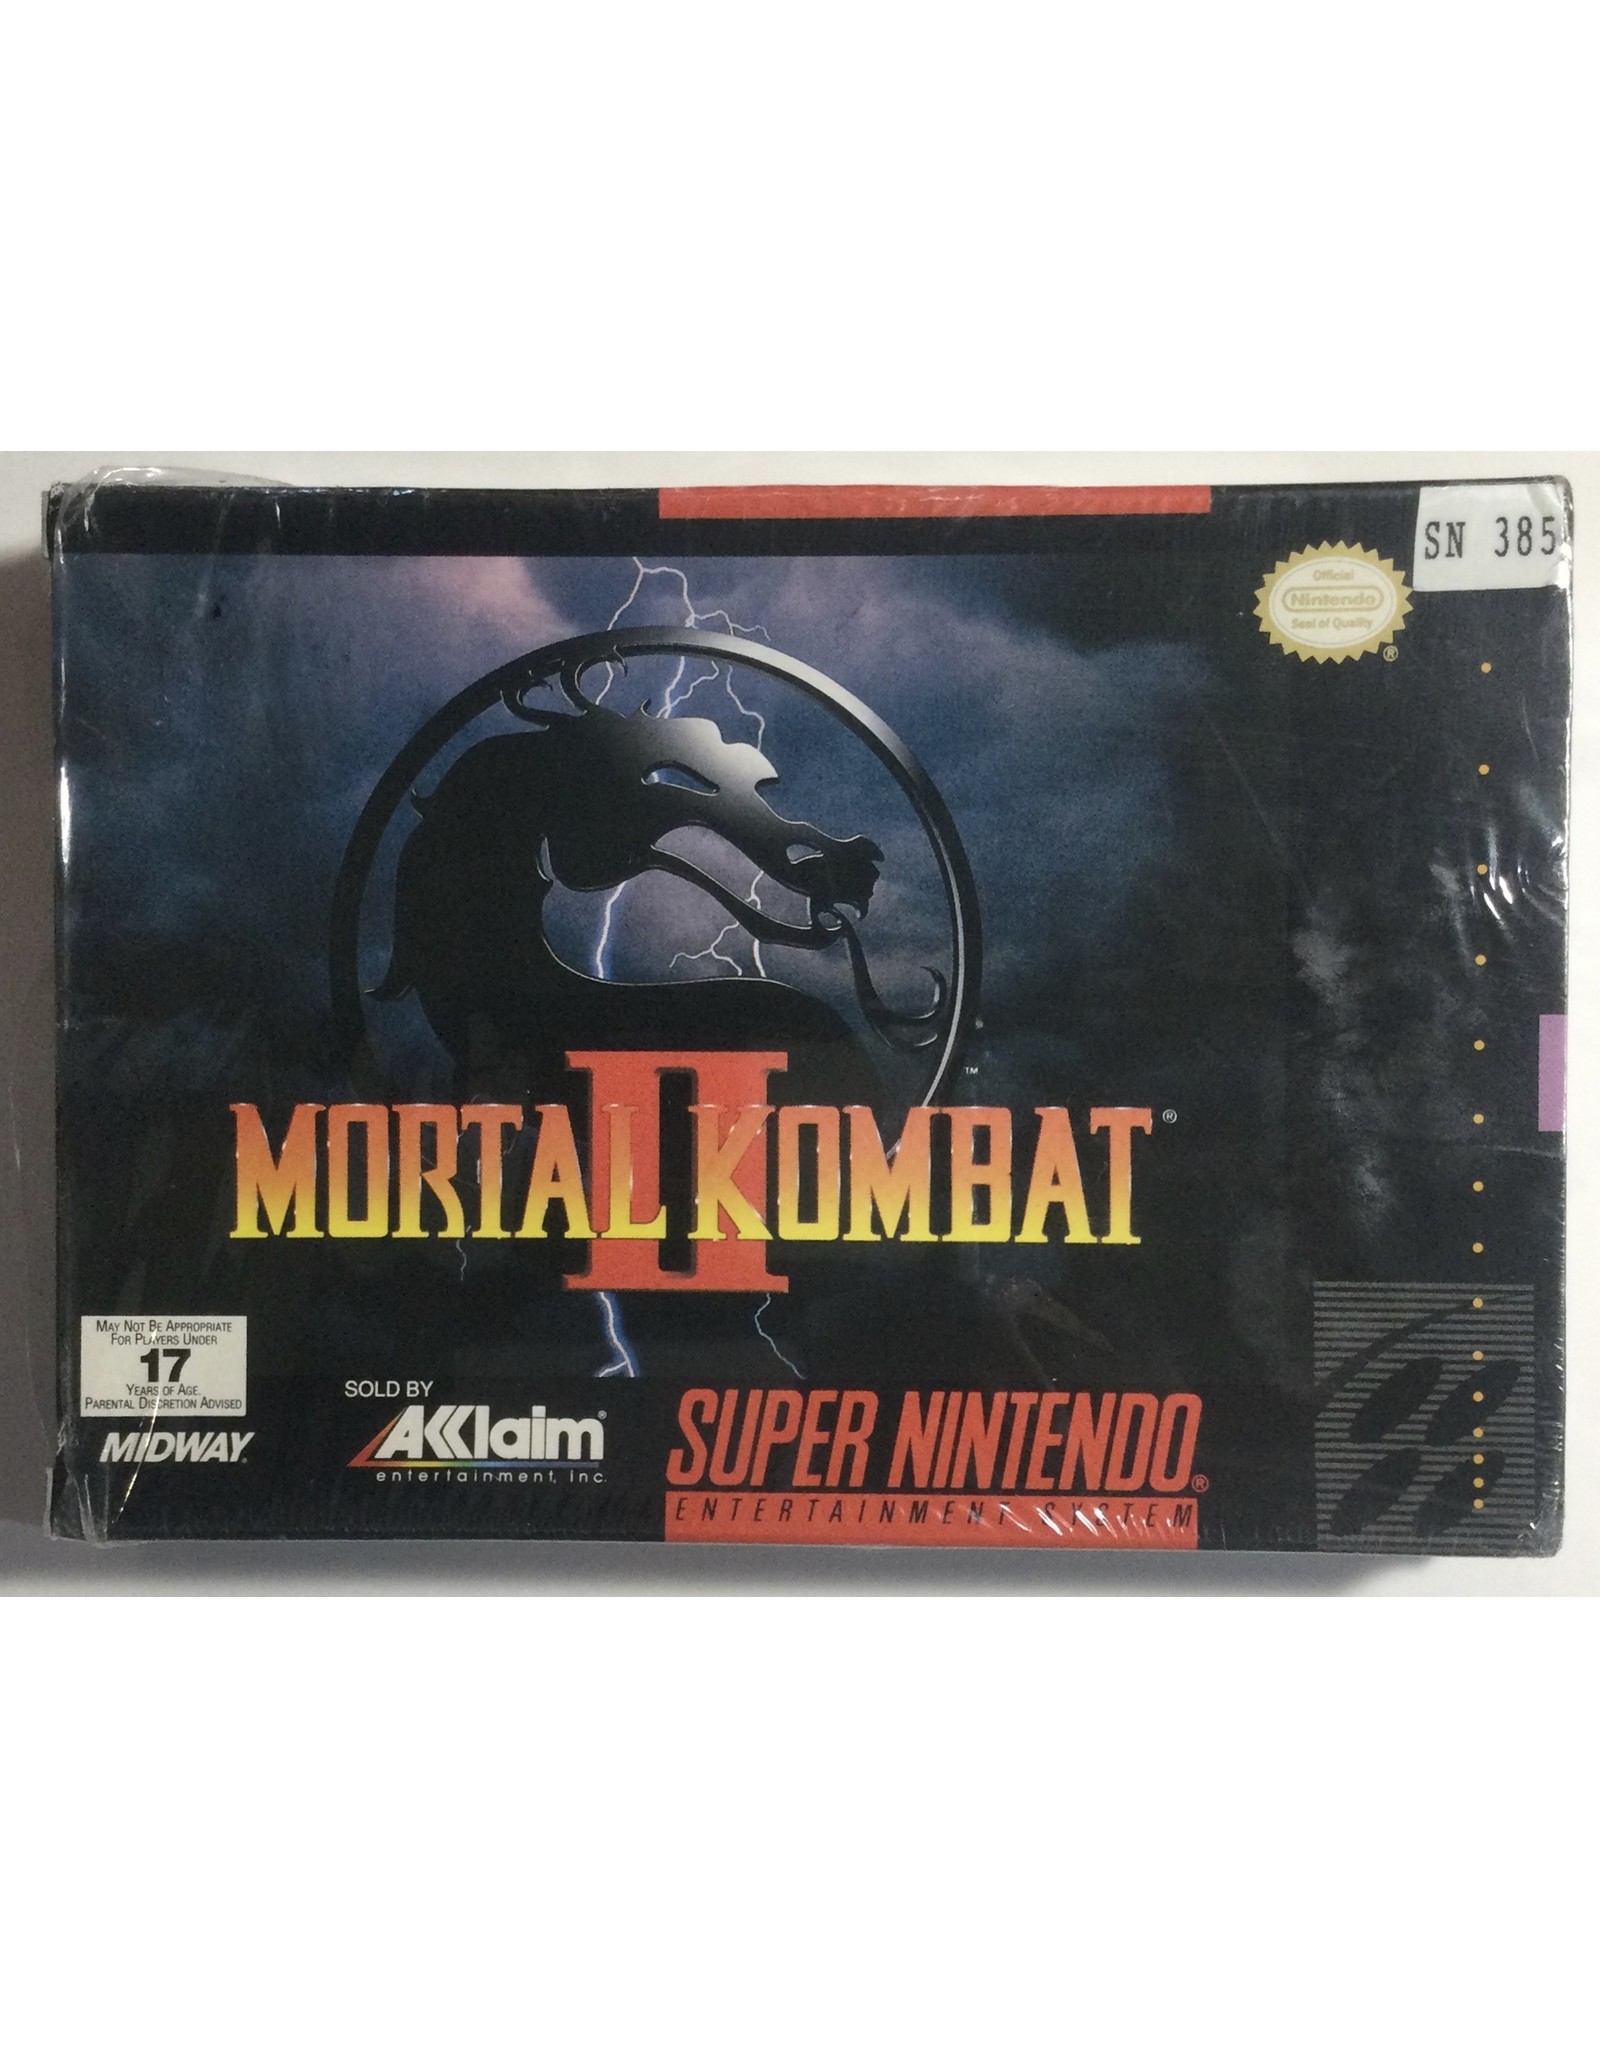 ACCLAIM Mortal Kombat II for Super Nintendo Entertainment System (SNES) - CIB